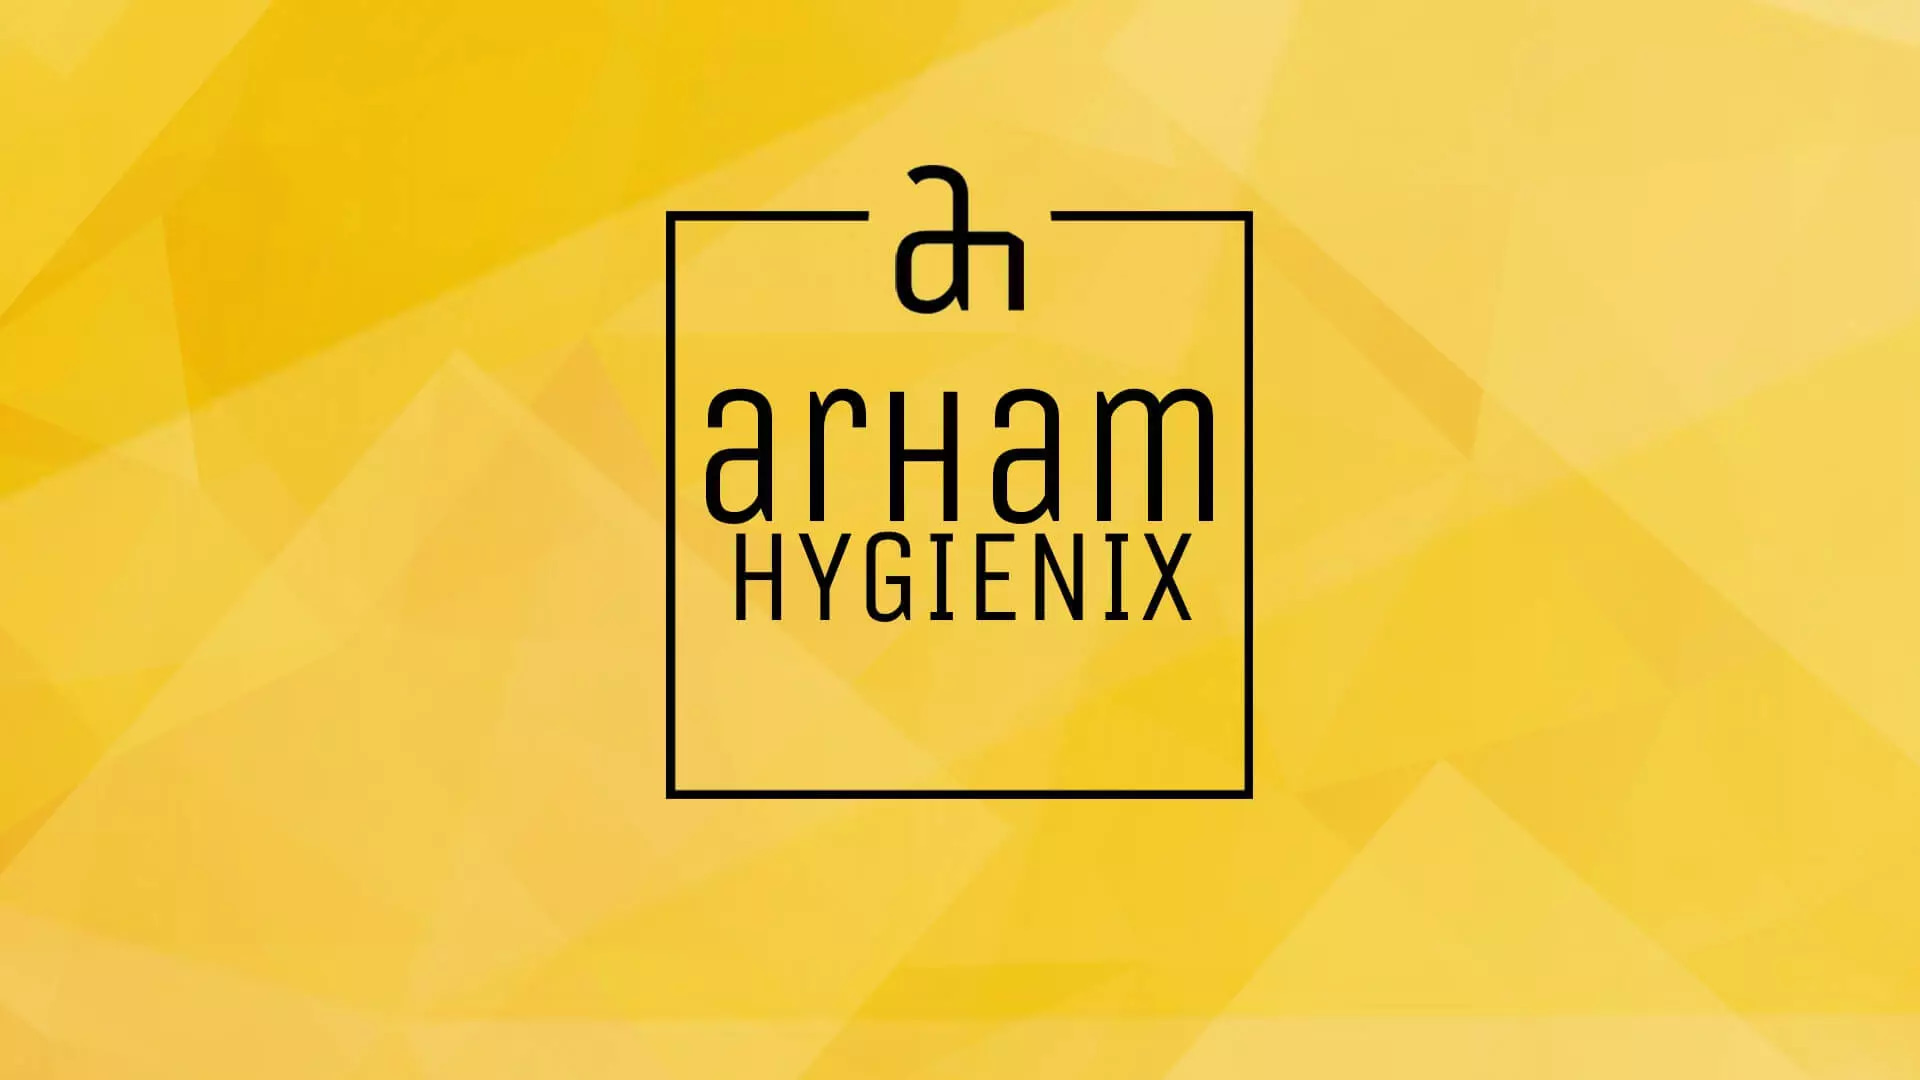 arham hygienix cover